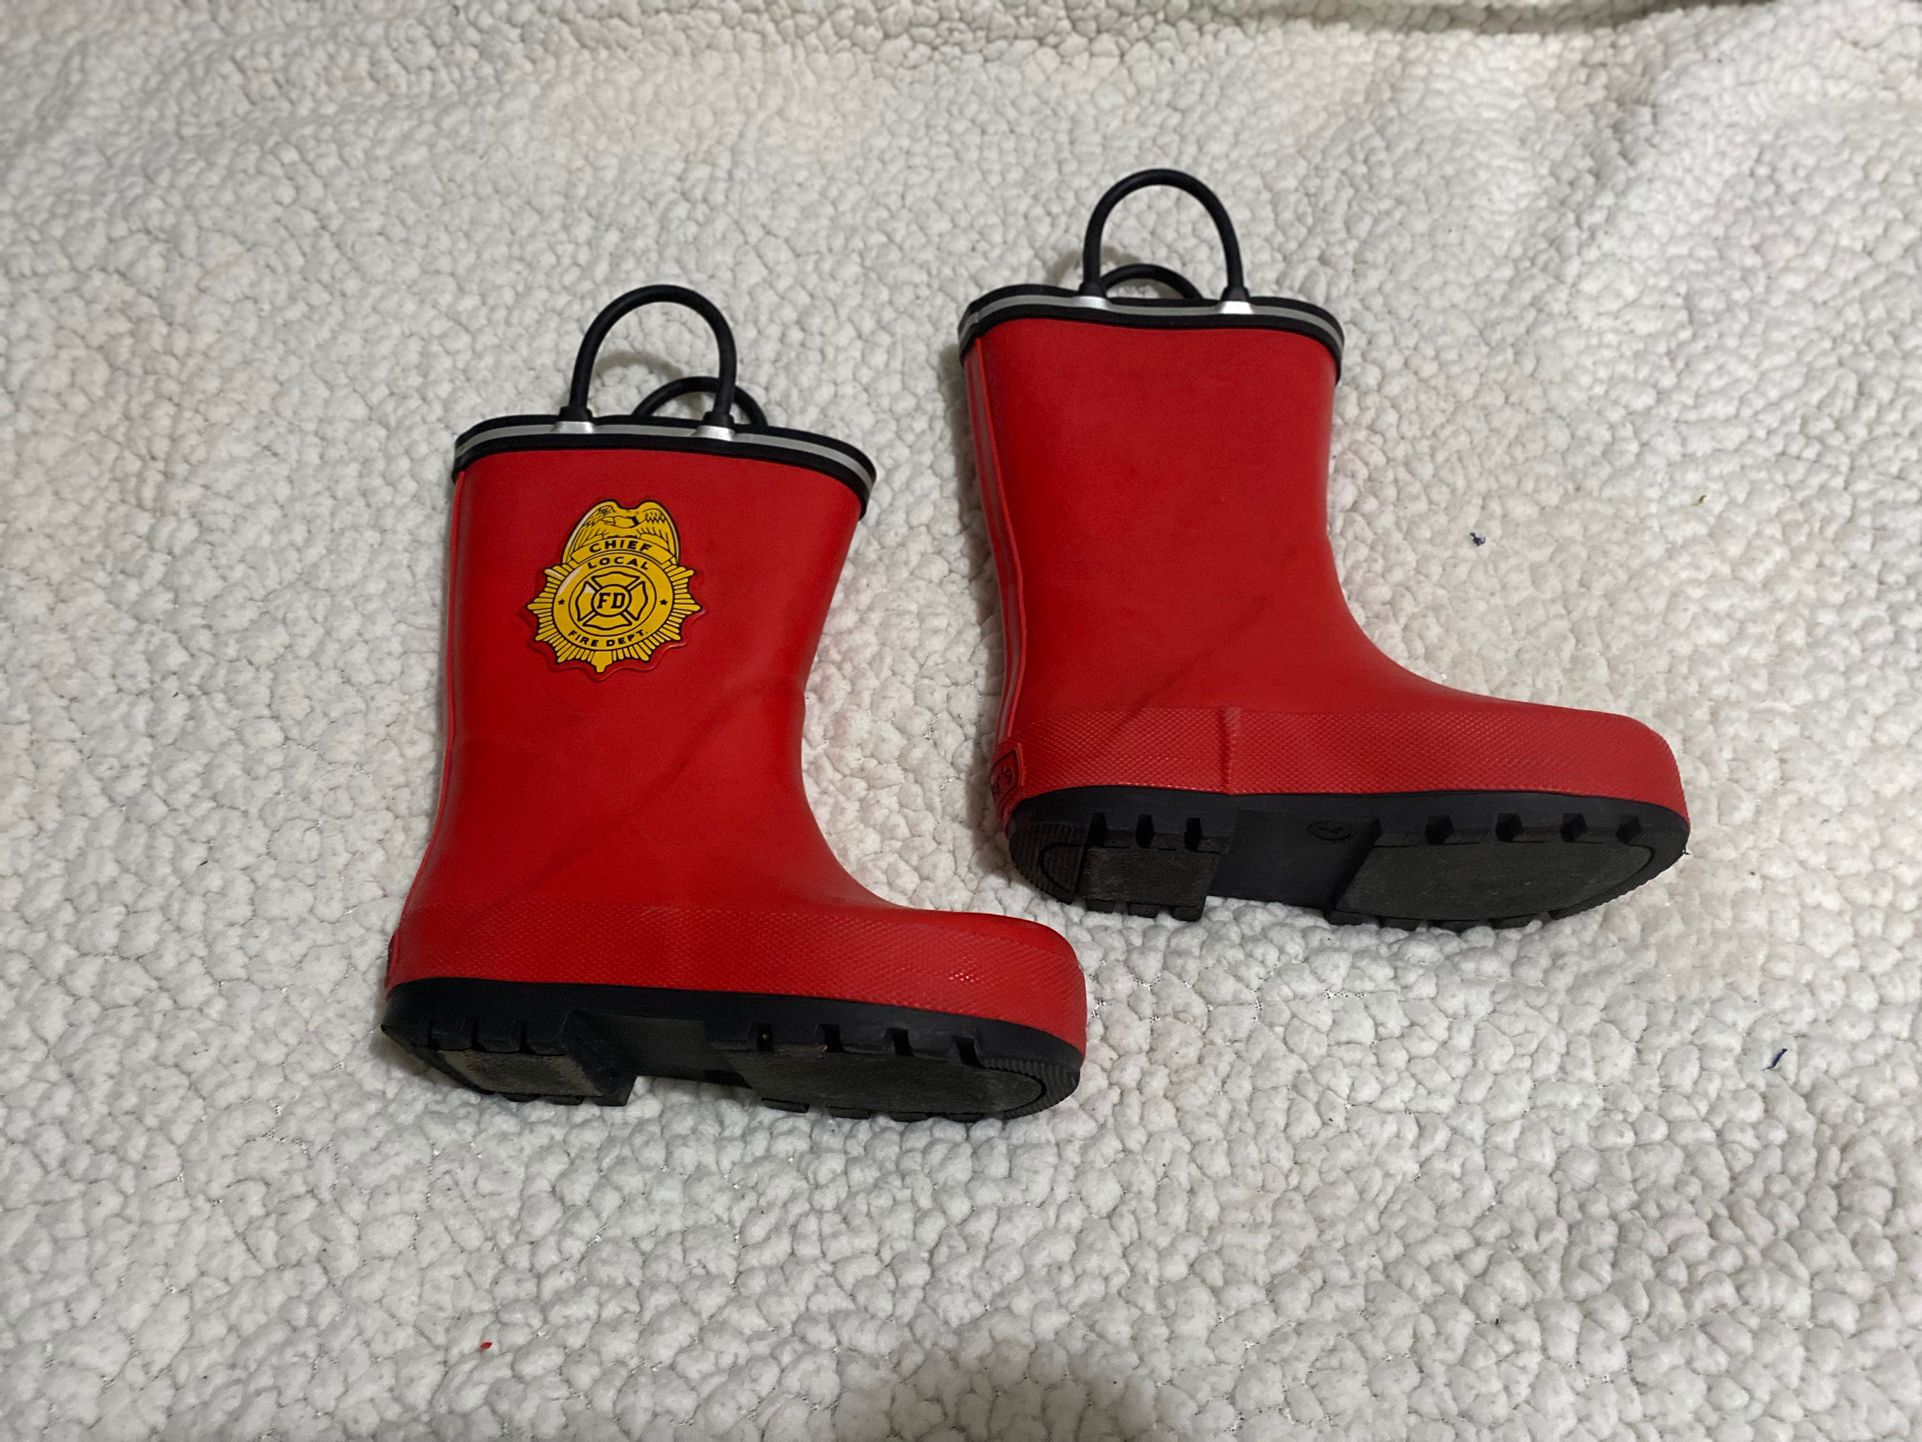 Raining Boots 